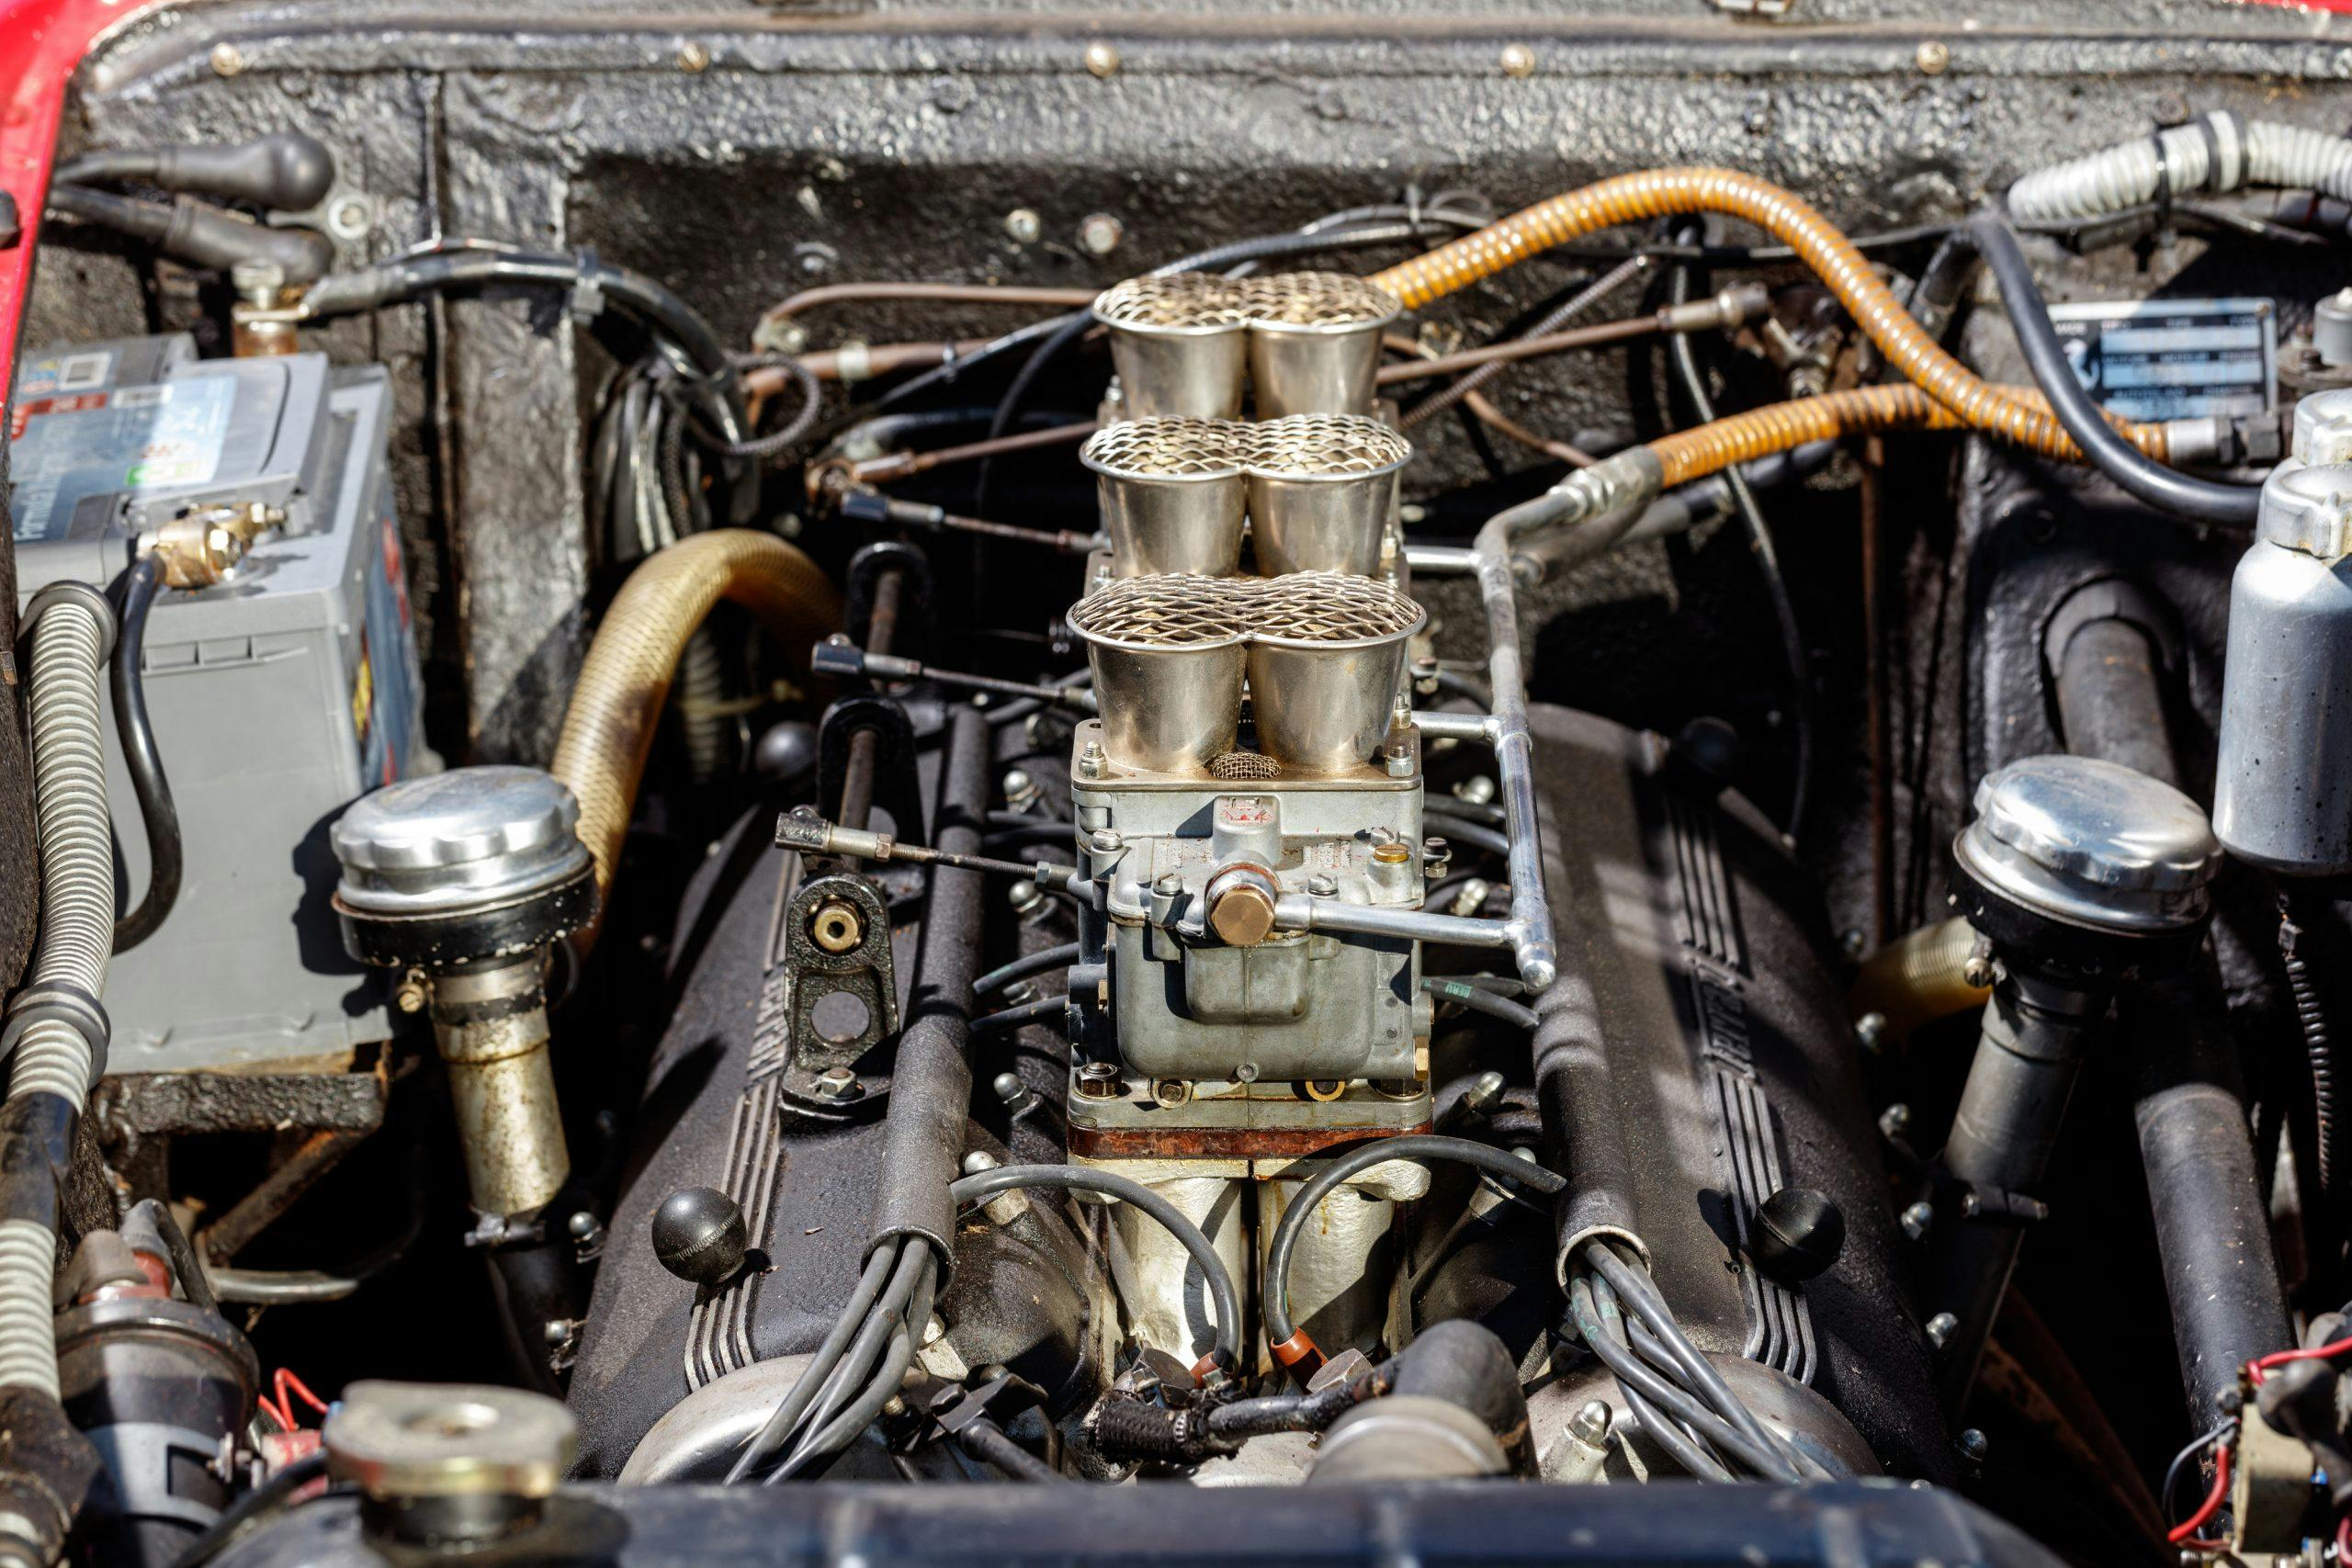 1955 Ferrari 250 engine